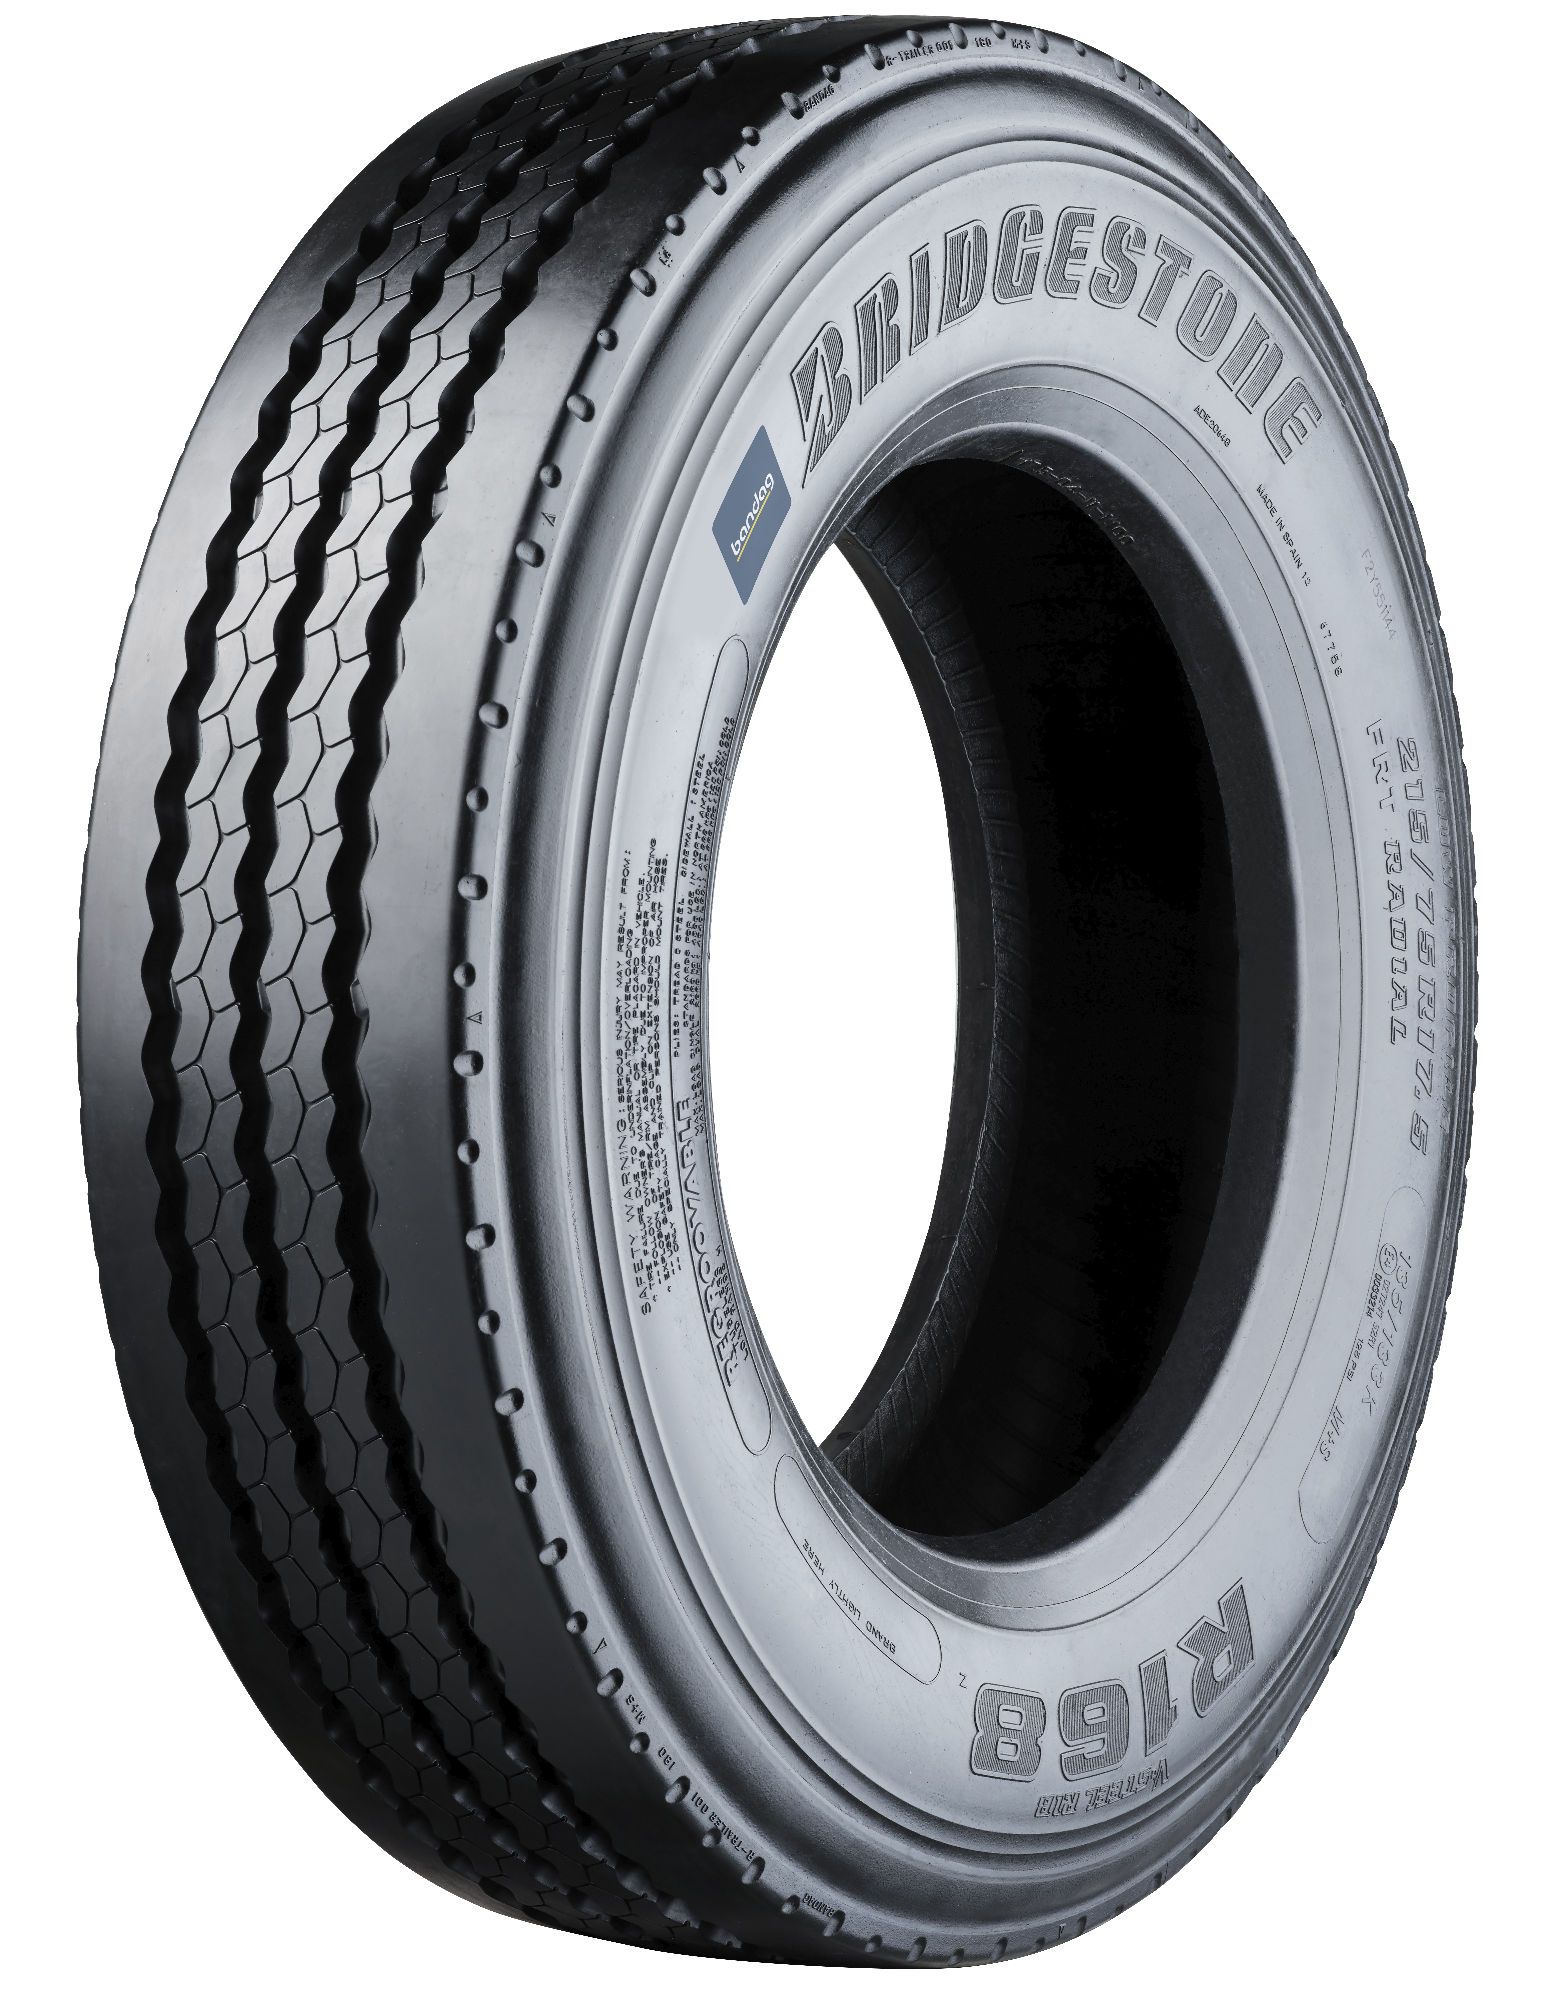 Gomme Nuove Bridgestone 245/70 R19.5 141/140J RT1 M+S (8.00mm) pneumatici nuovi Estivo